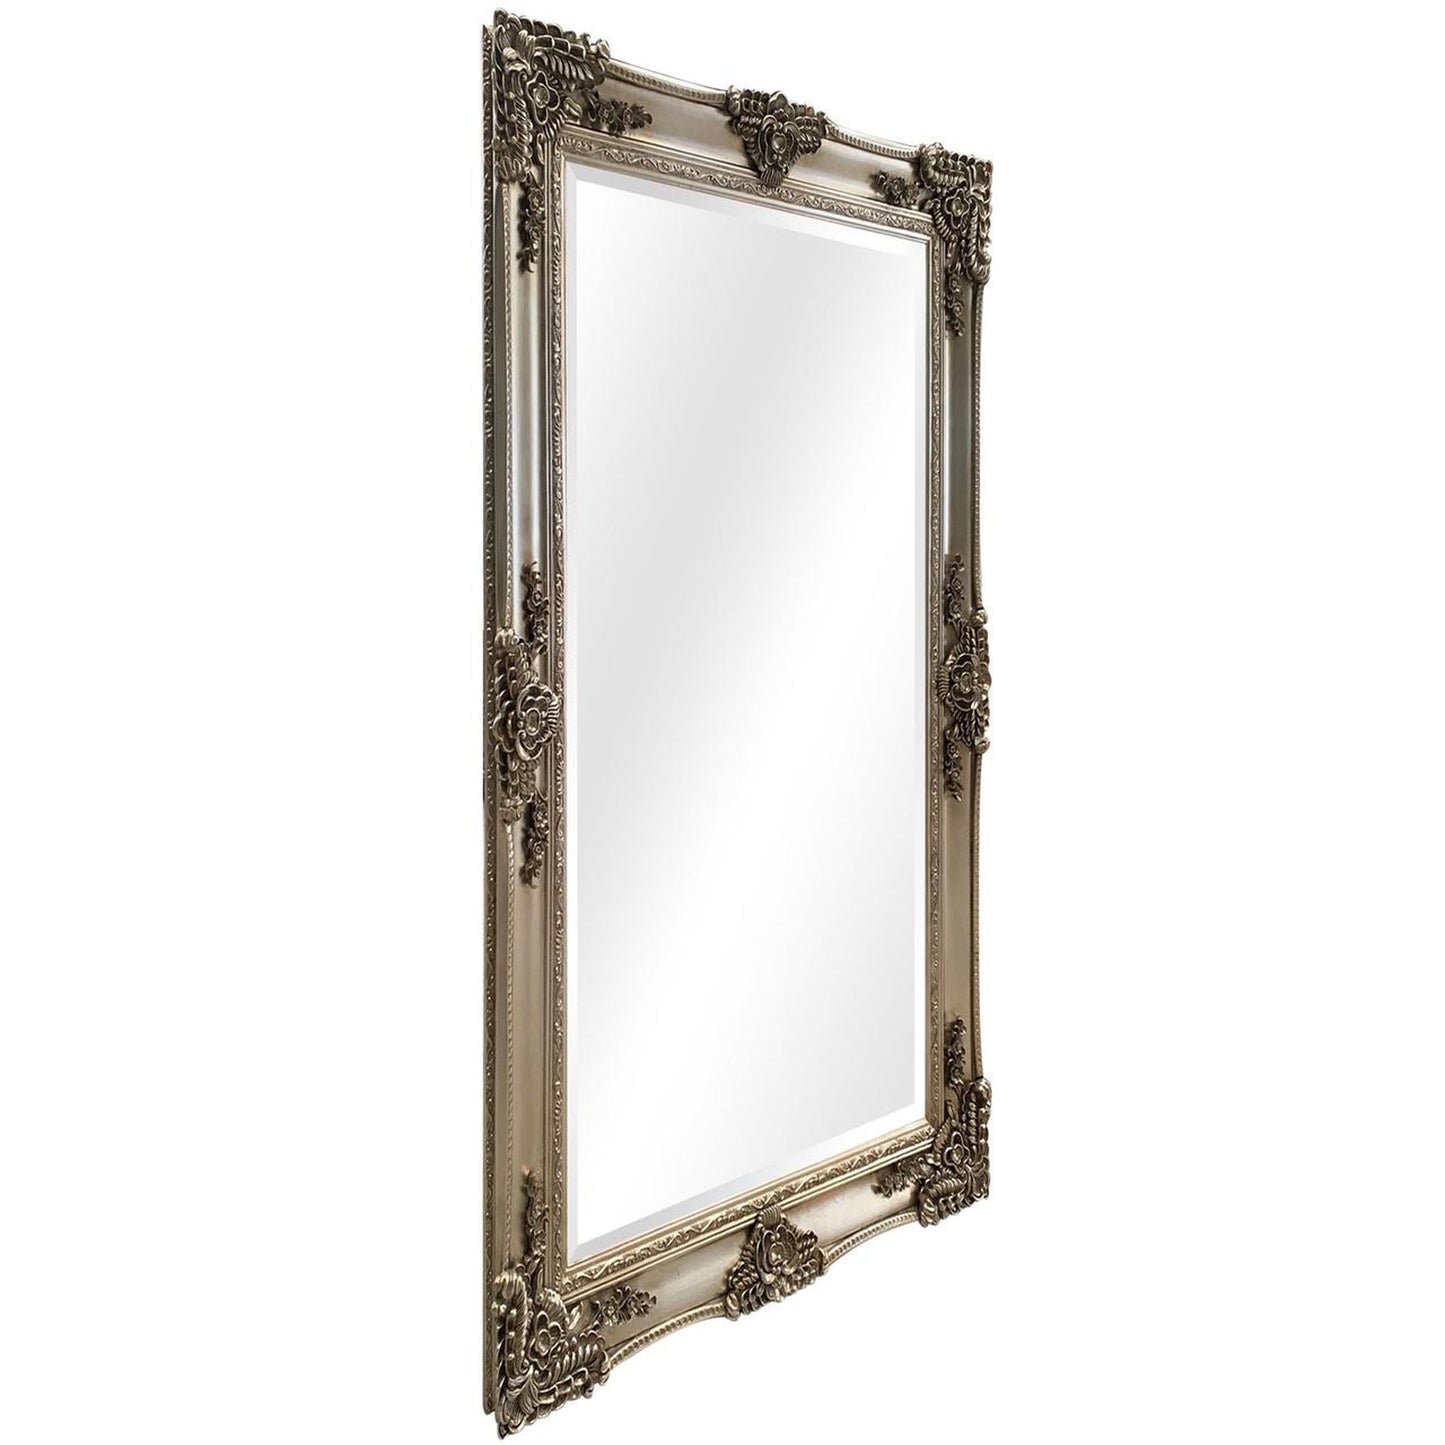 SBC Decor Mayfair Grande 46" x 70" Wall-Mounted Full Length Wood Frame Leaner Dresser Mirror In Champagne Gold Finish